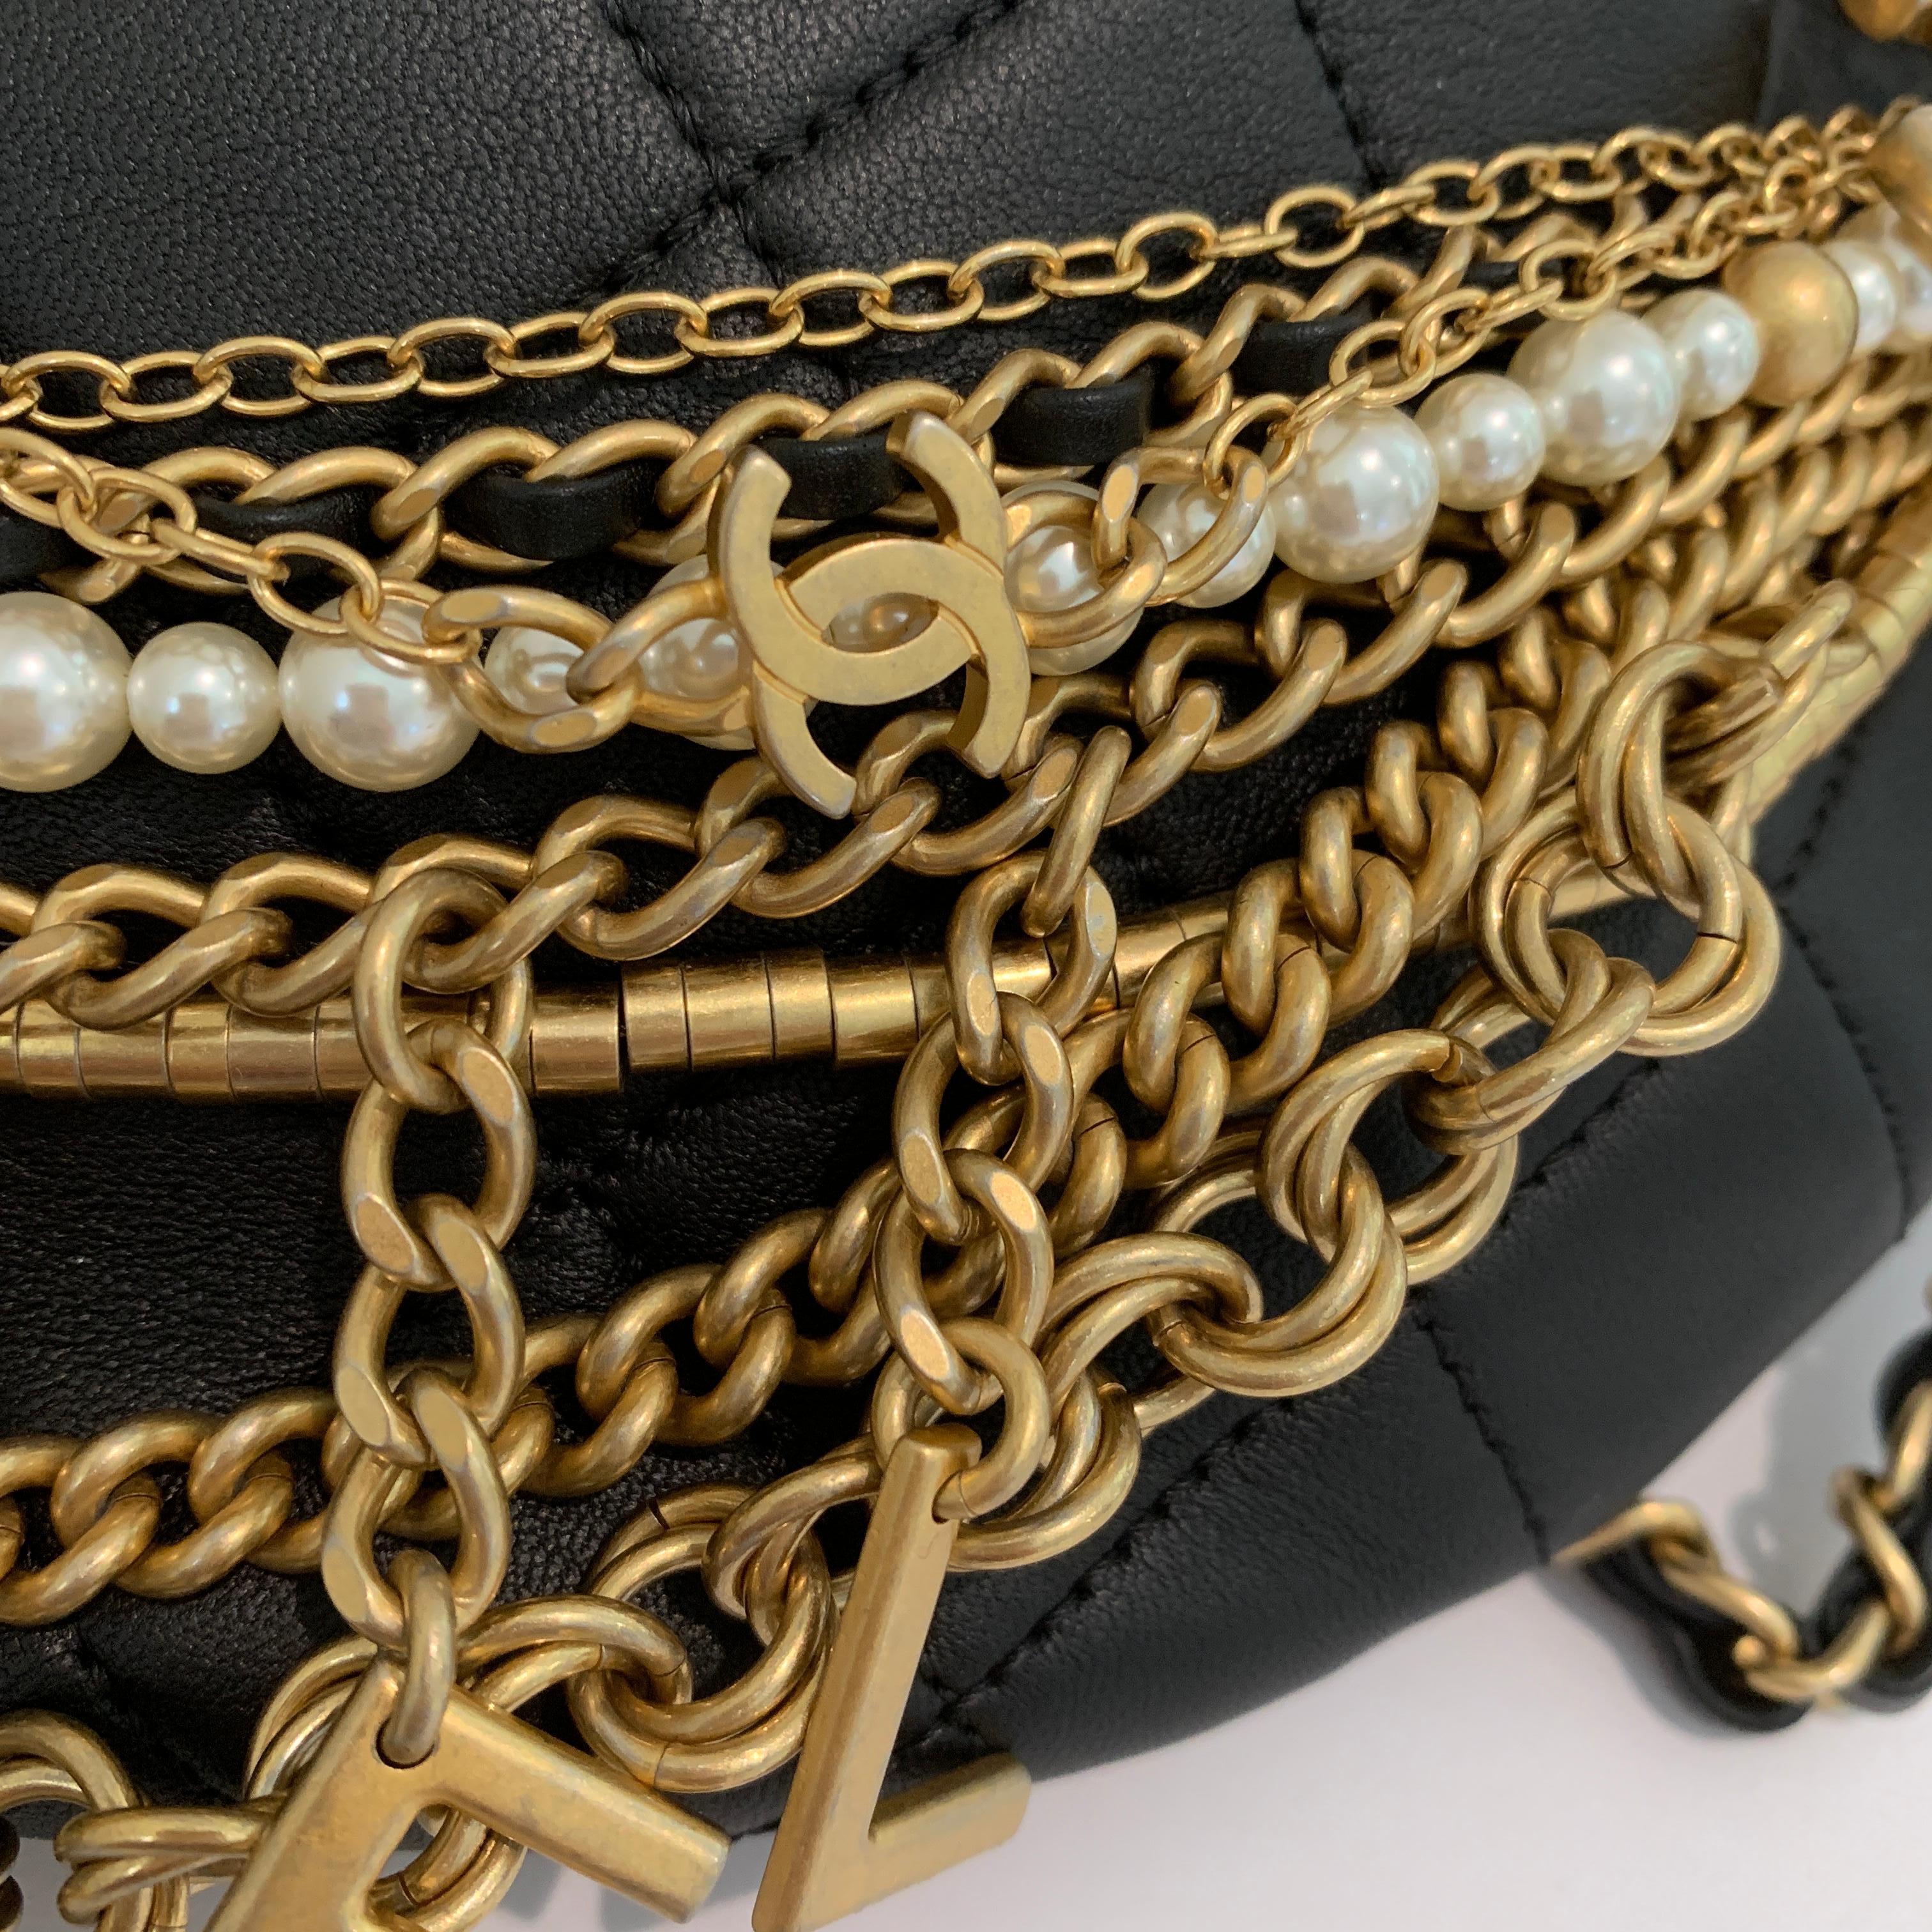 Women's or Men's Chanel Waist Bum Bag Lambskin, Gold-Tone Pearls Chains